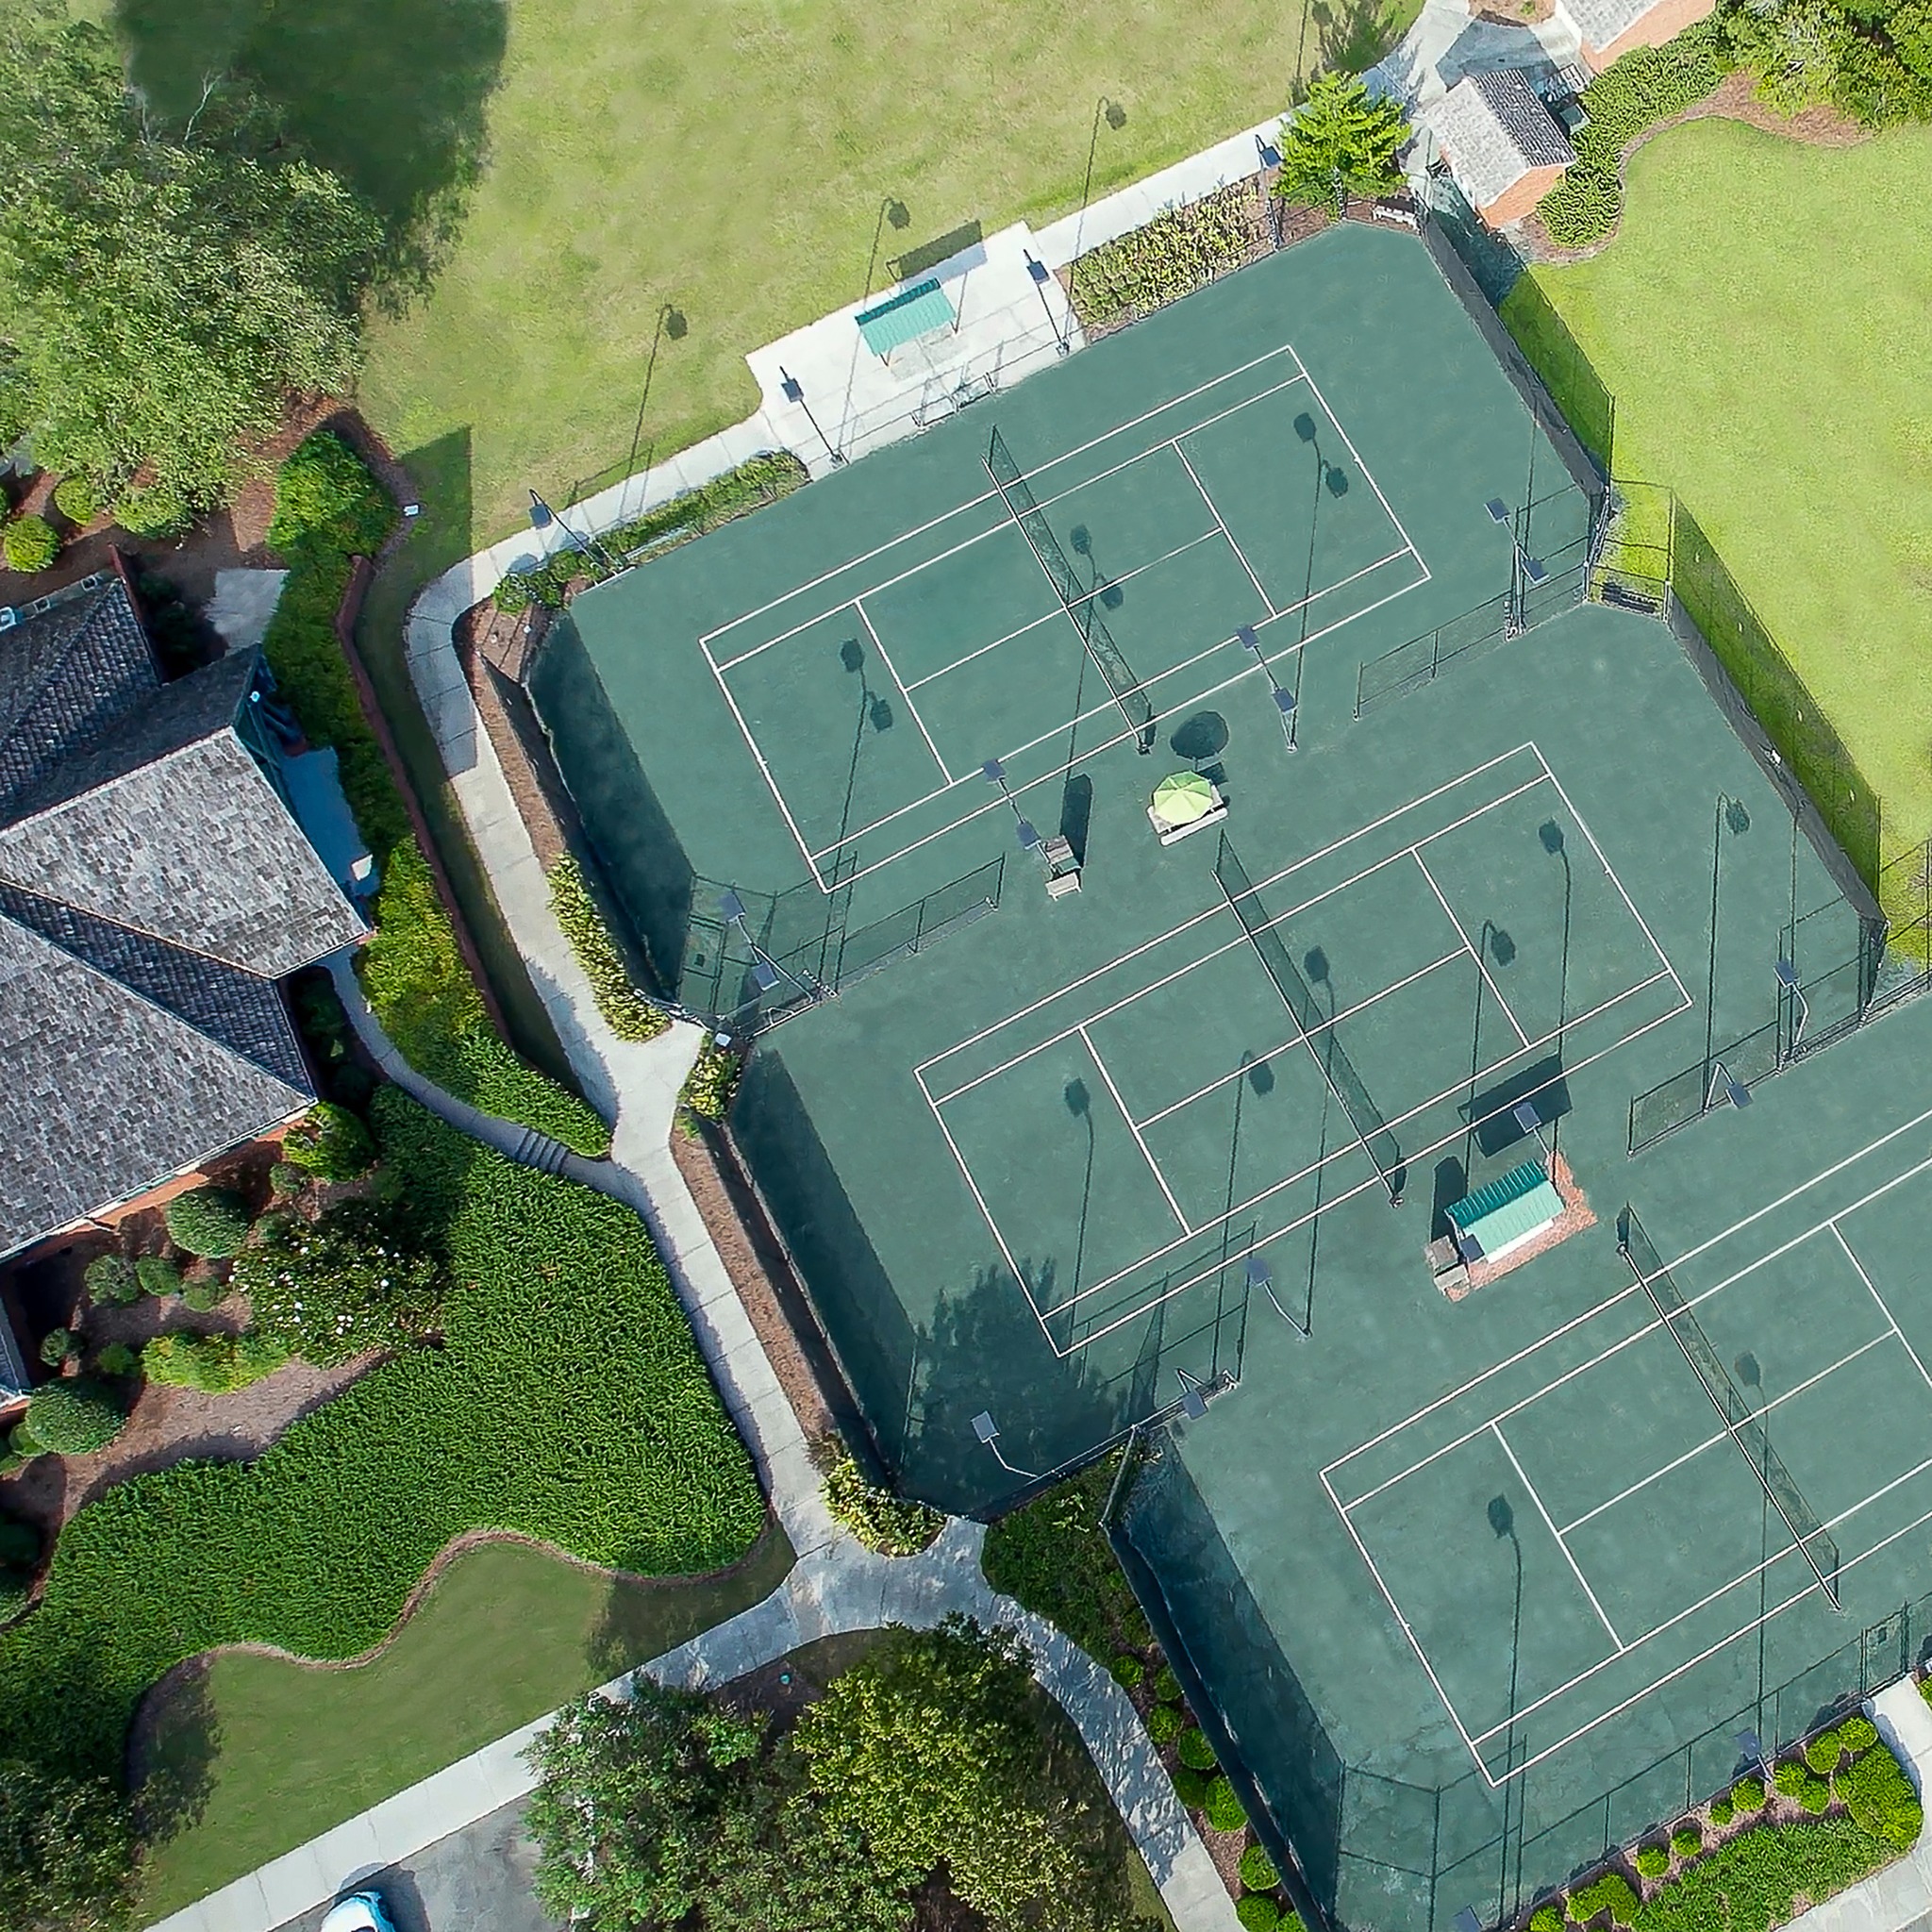 tennis_courts